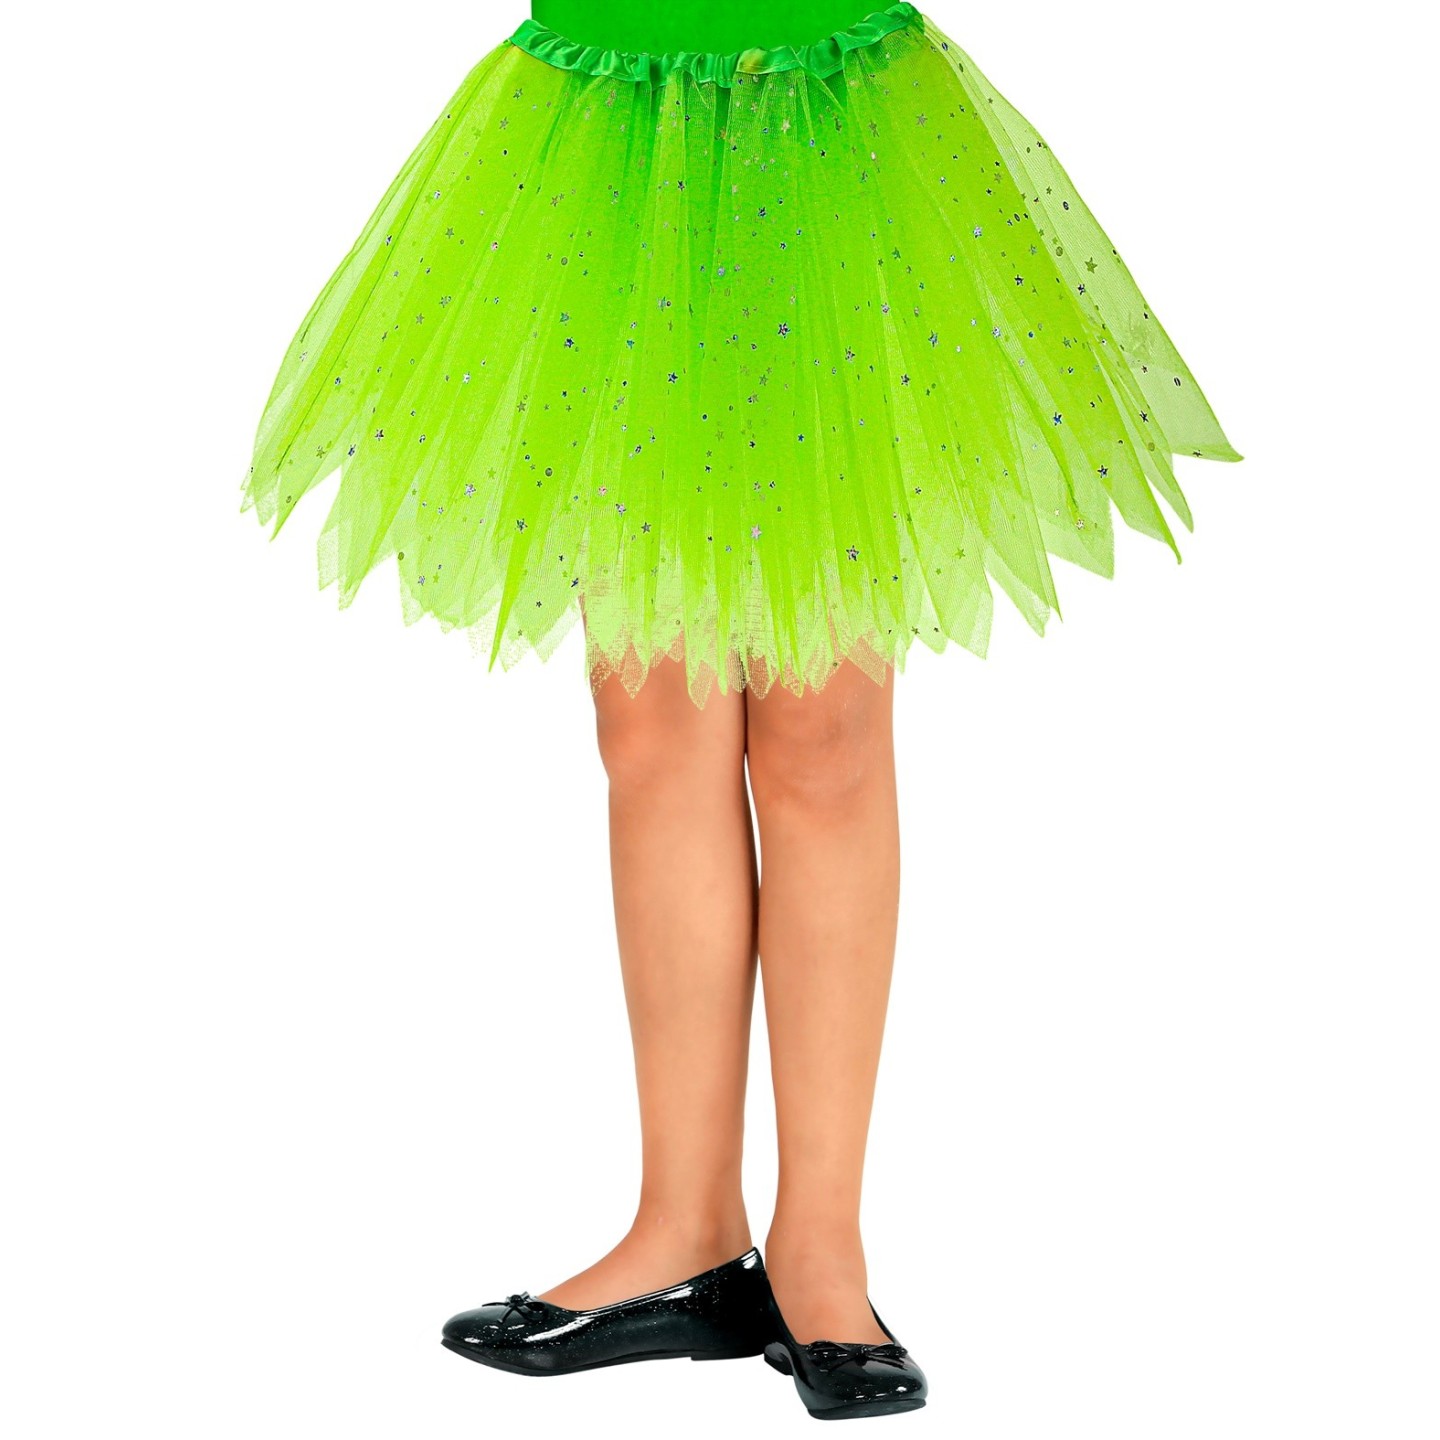 Gespecificeerd vandaag Hoopvol Groene glitter tutu kind kopen ? | Jokershop.be - Verkleedkleding